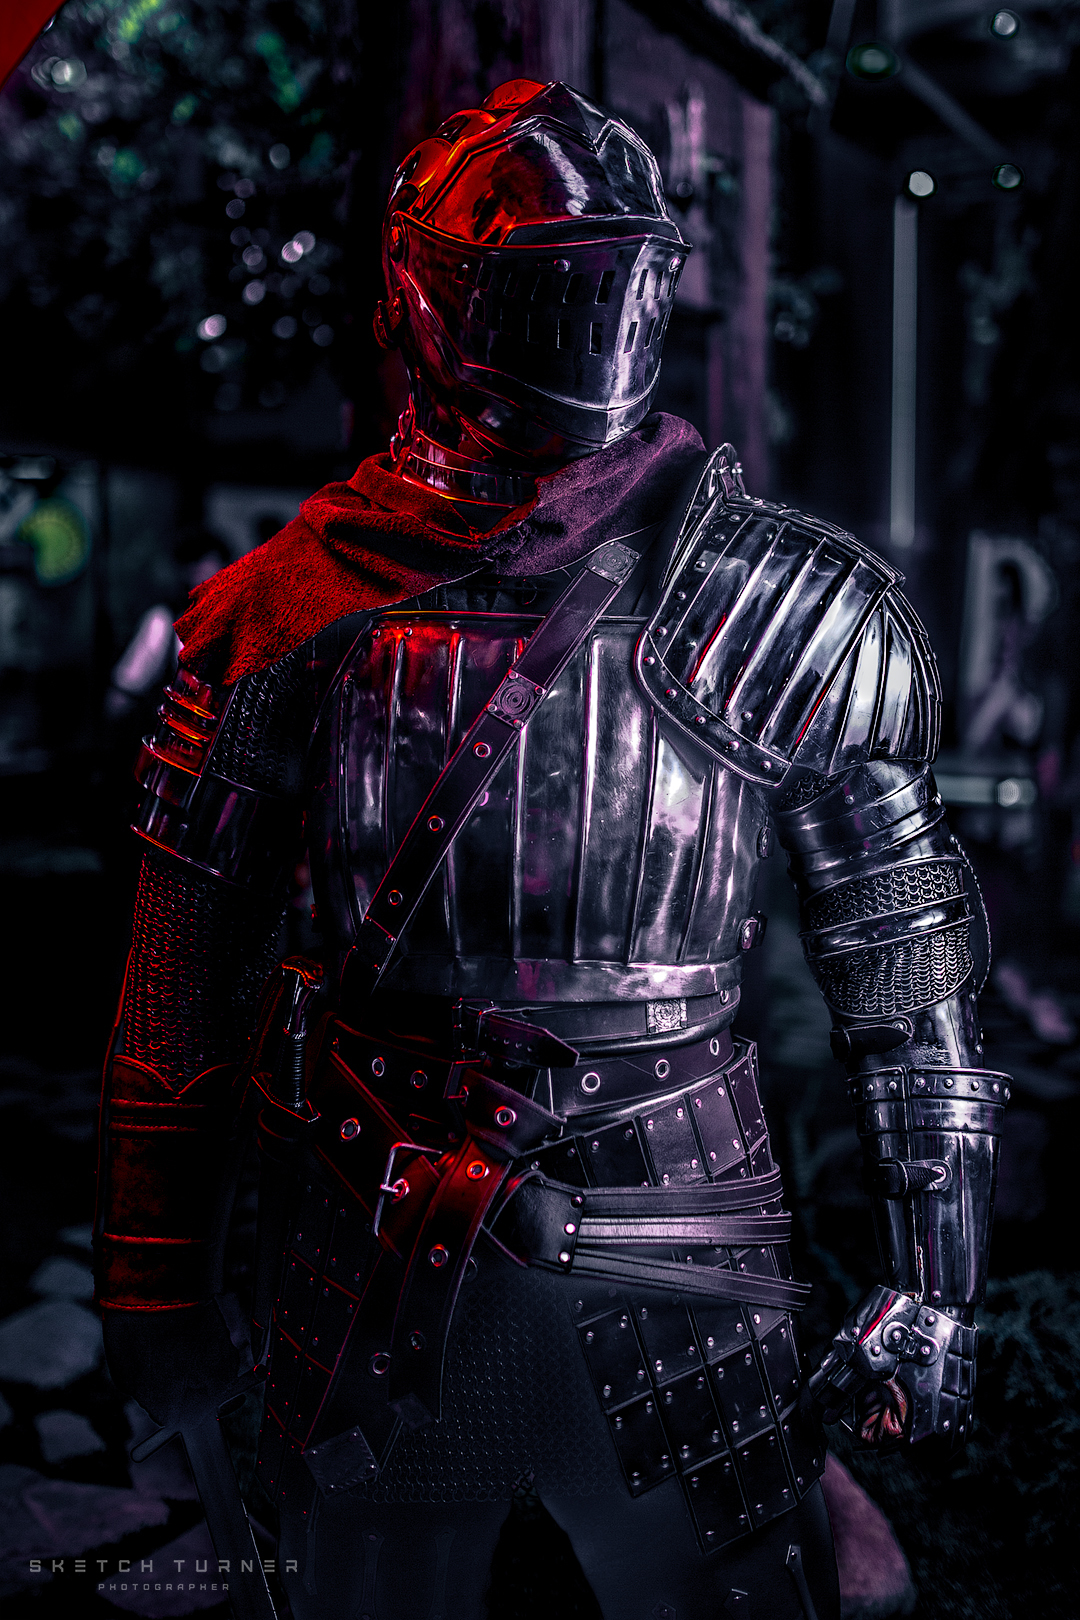 Knight armor from Dark Souls - My, Dark souls, Dark souls 2, Dark souls 3, Cosplay, Russian cosplay, Knight, Armor, Longpost, Knights